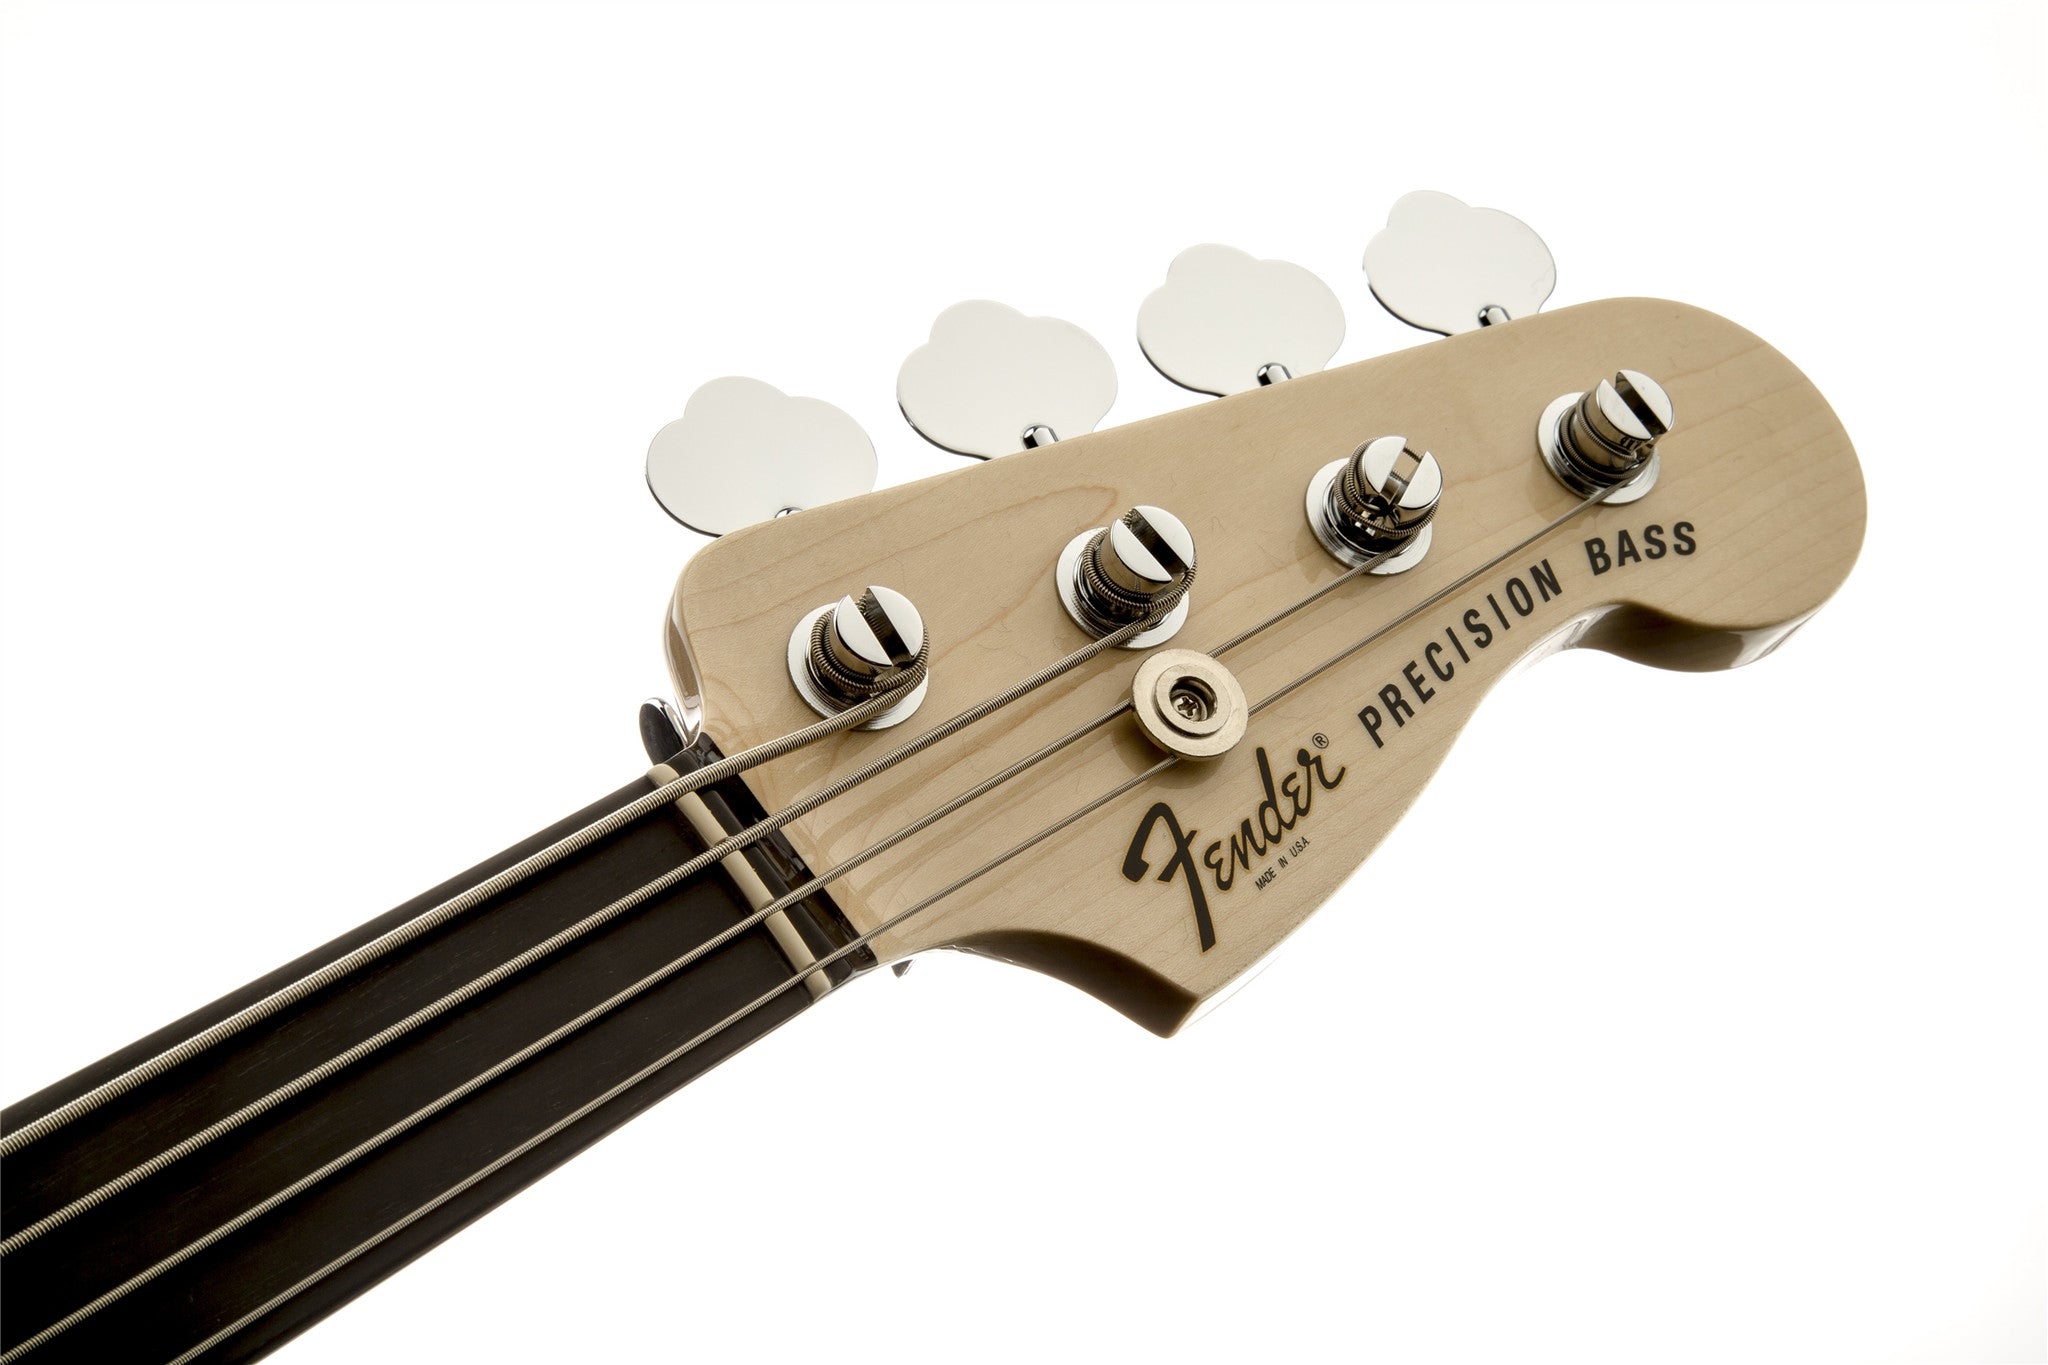 Fender Tony Franklin Fretless Precision Bass®, Ebony Fingerboard, 3-Color Sunburst 0190085800 - L.A. Music - Canada's Favourite Music Store!